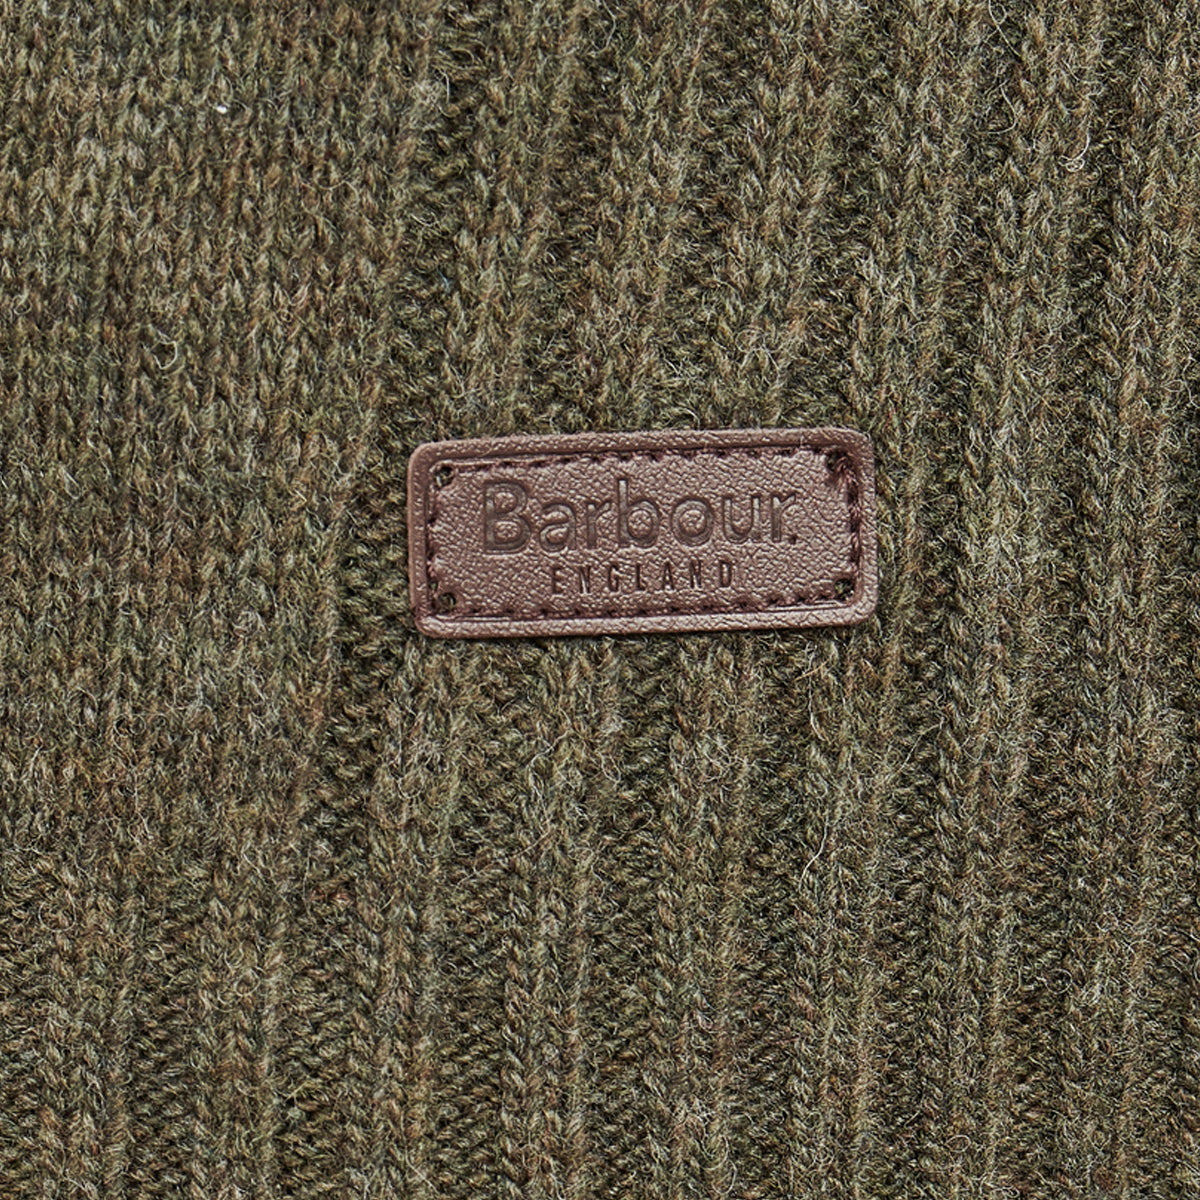 Barbour Fisherman Sweater 1110